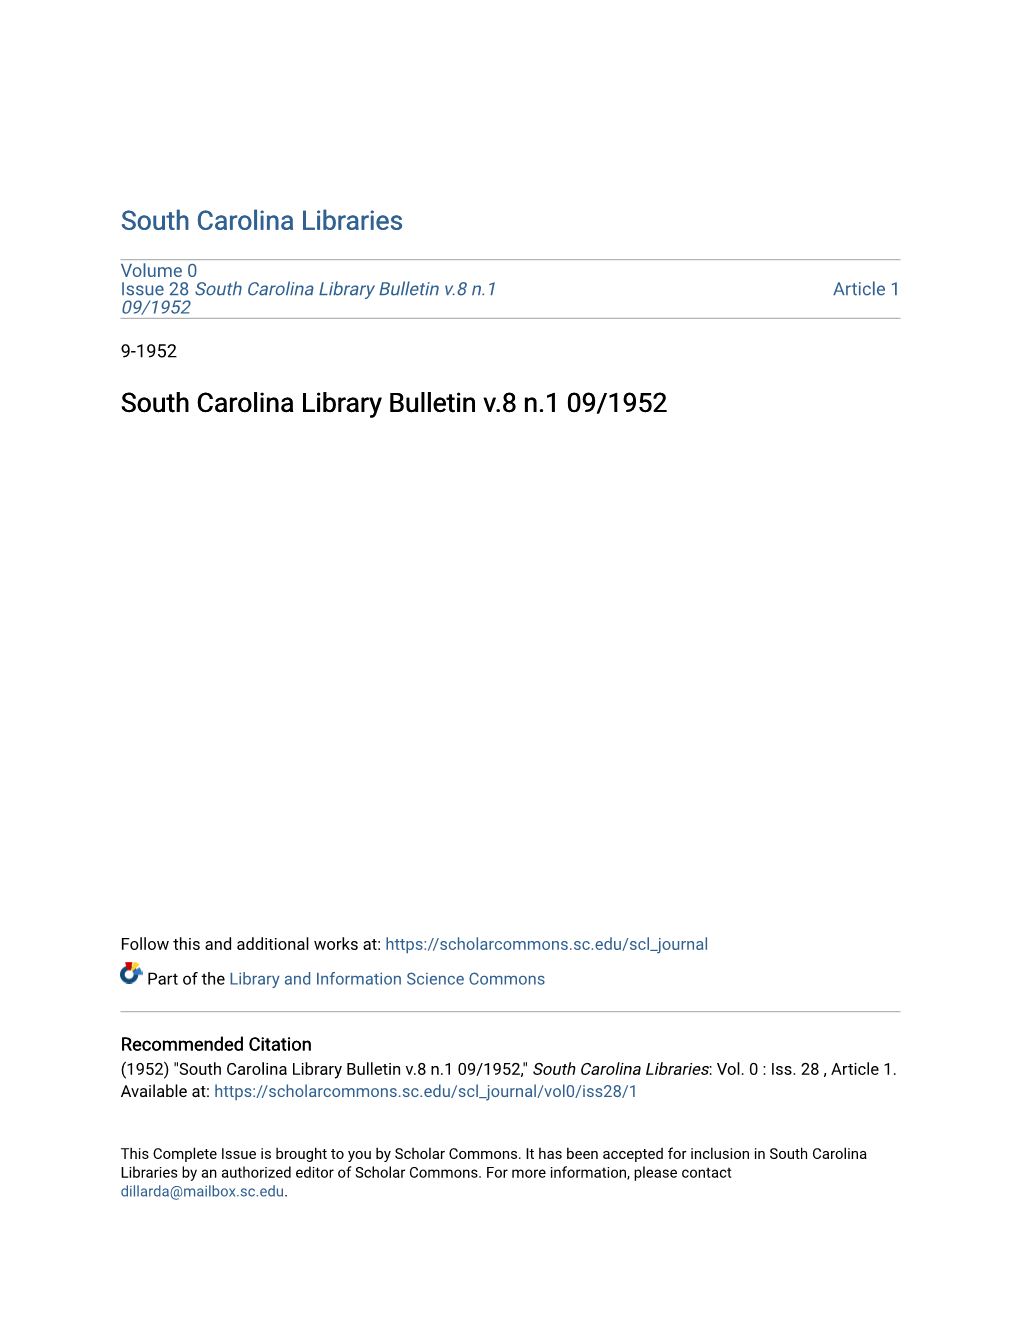 South Carolina Library Bulletin V.8 N.1 09/1952